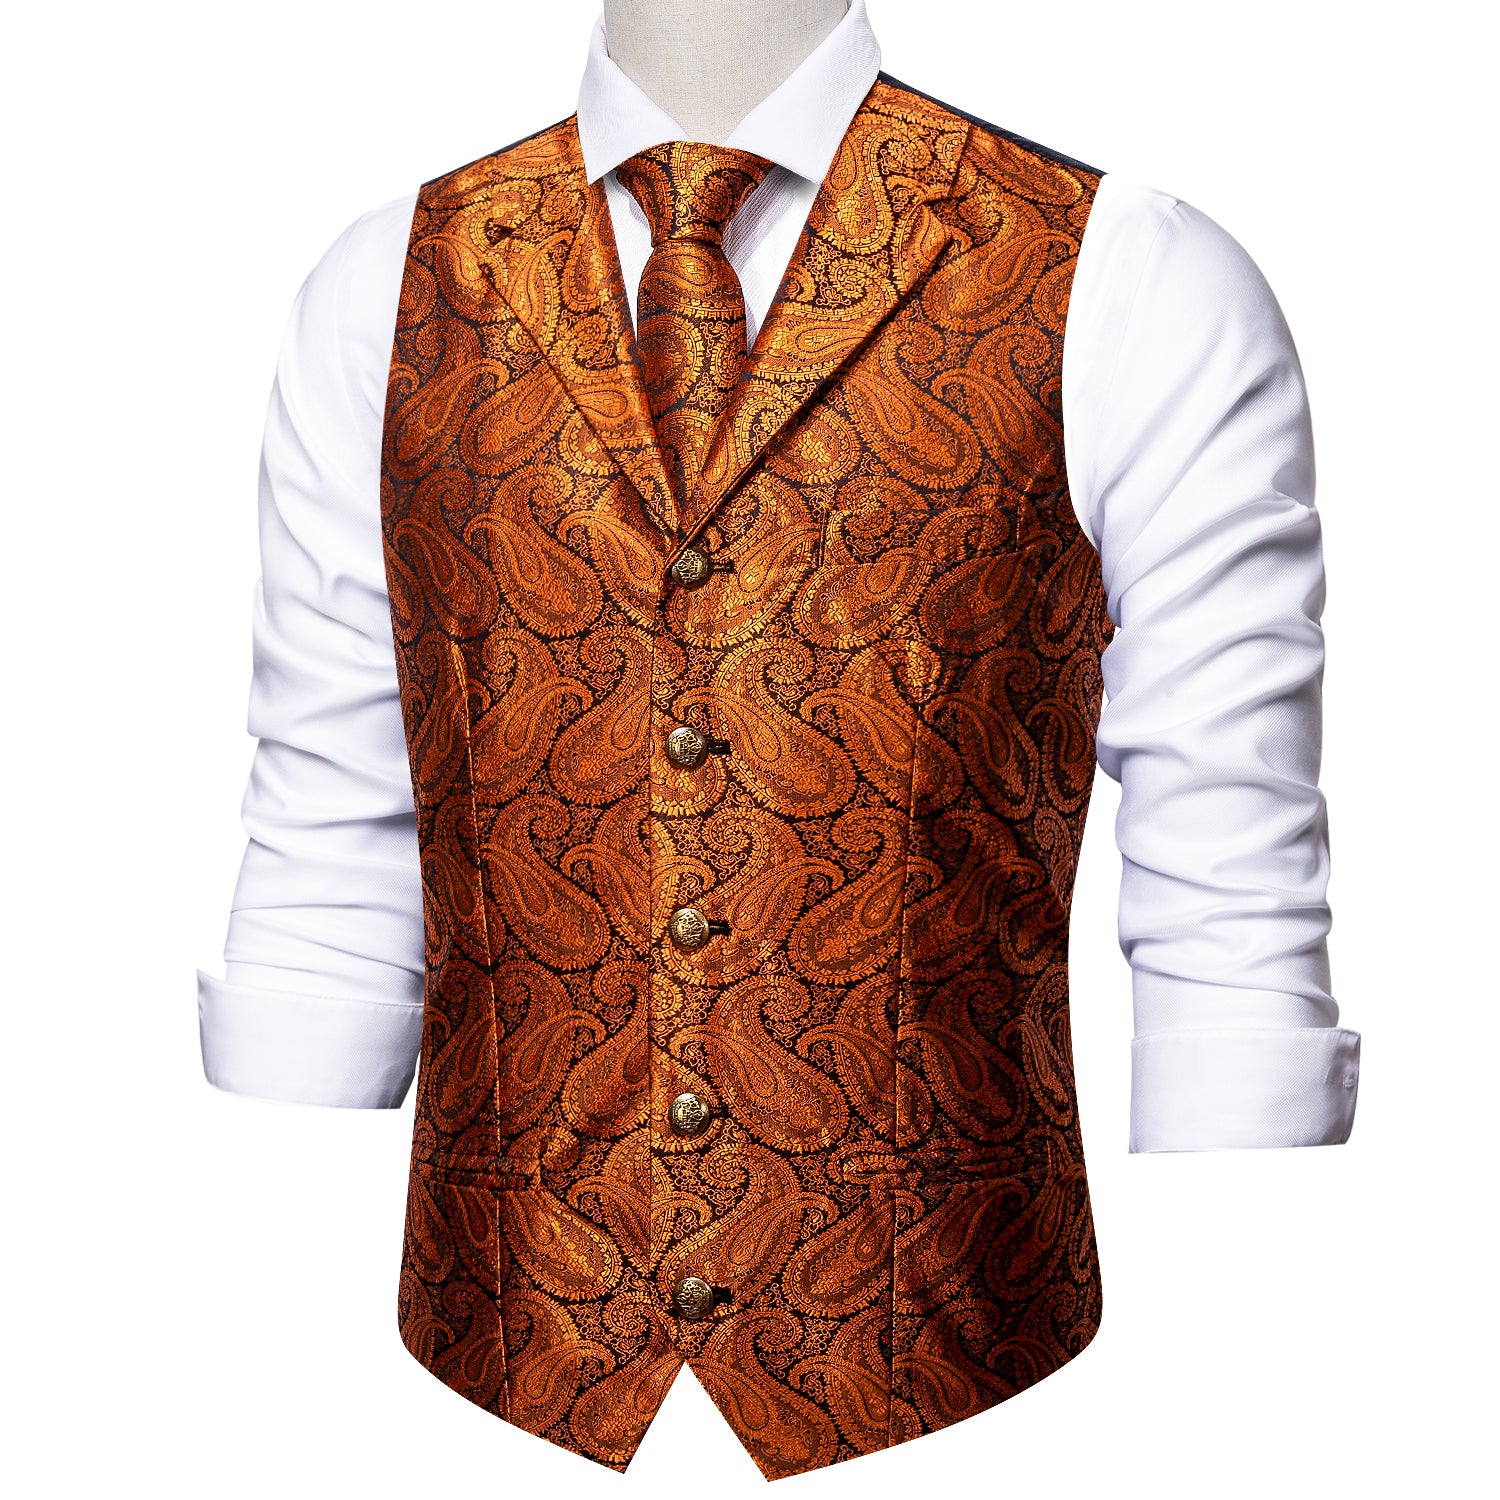 Barry.wang Men's Vest Shining Orange Paisley Silk Notched Collar Vest Necktie Set